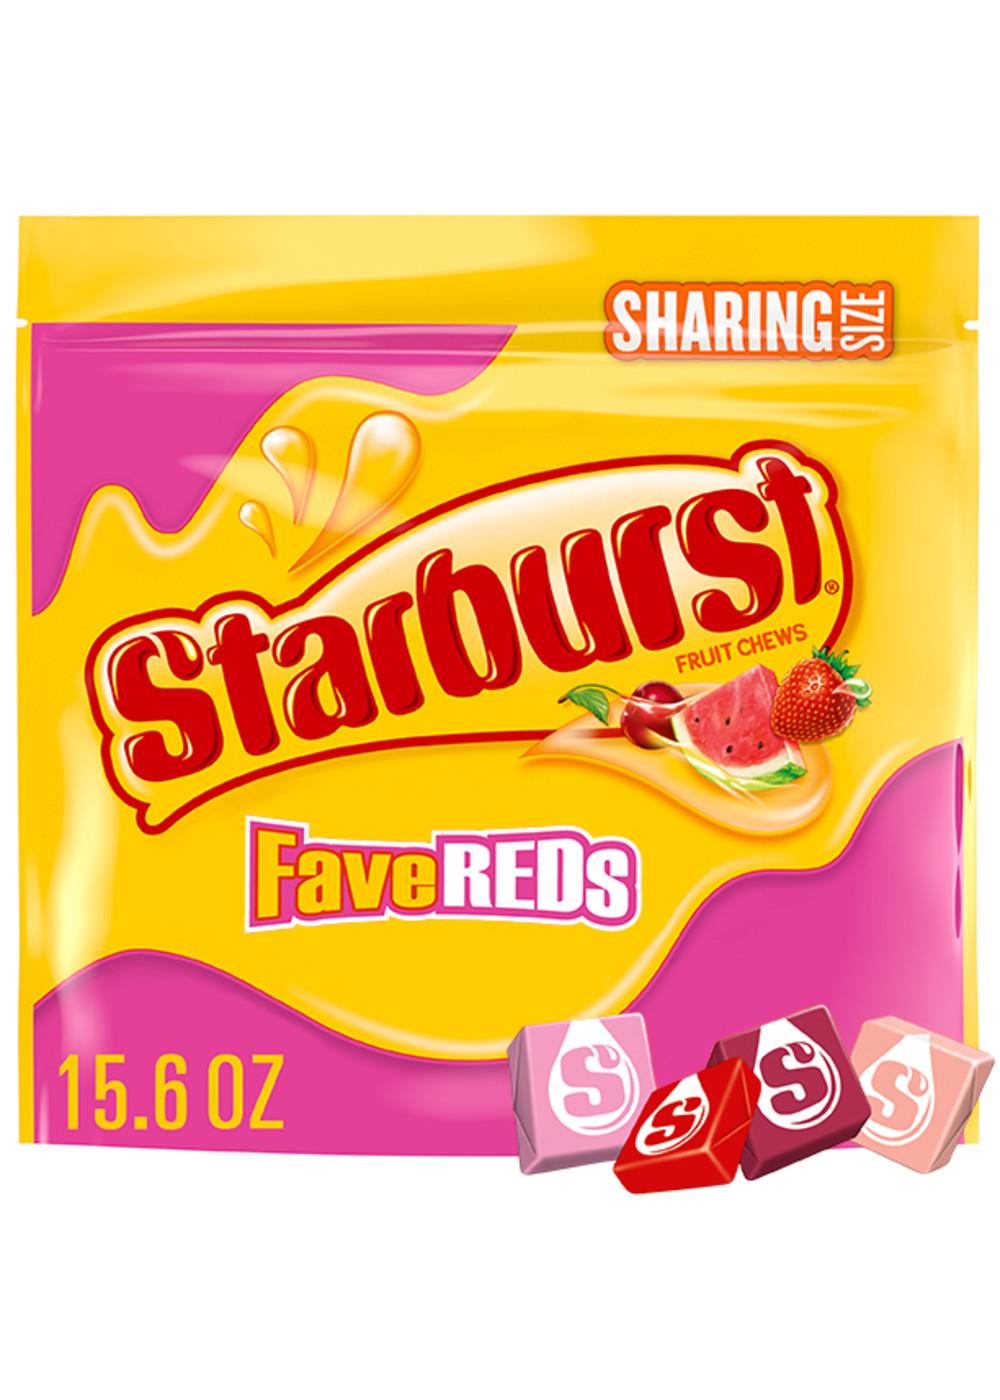 Starburst FaveReds Fruit Chews Candy - Sharing Size; image 10 of 10